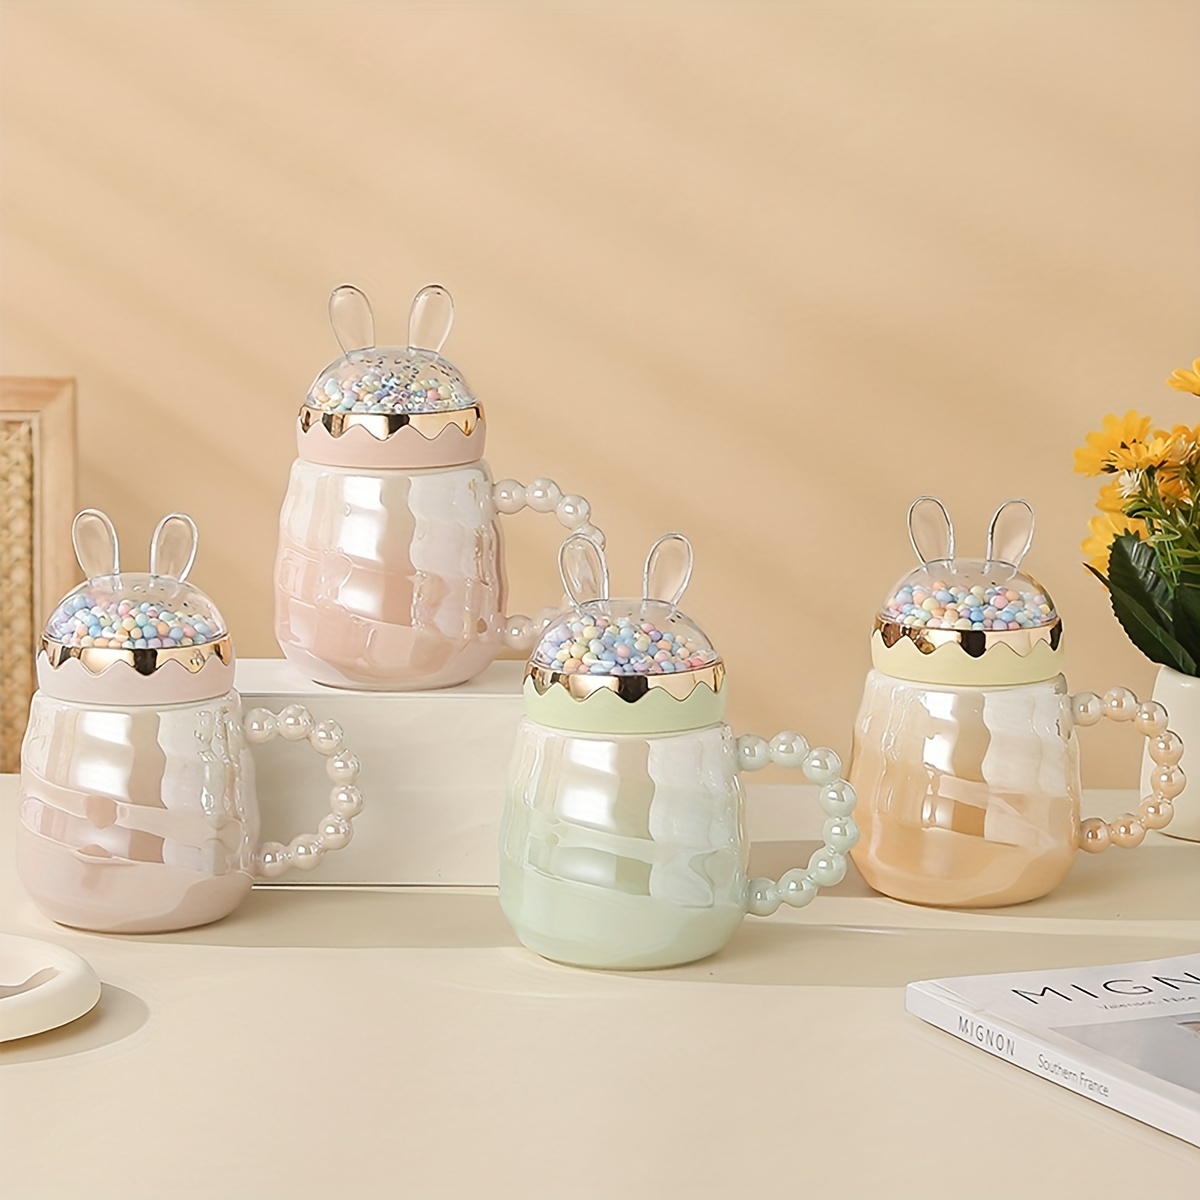 Flower Coffee Mug With Lid Ceramic Coffee Cups Cute Kawaii - Temu